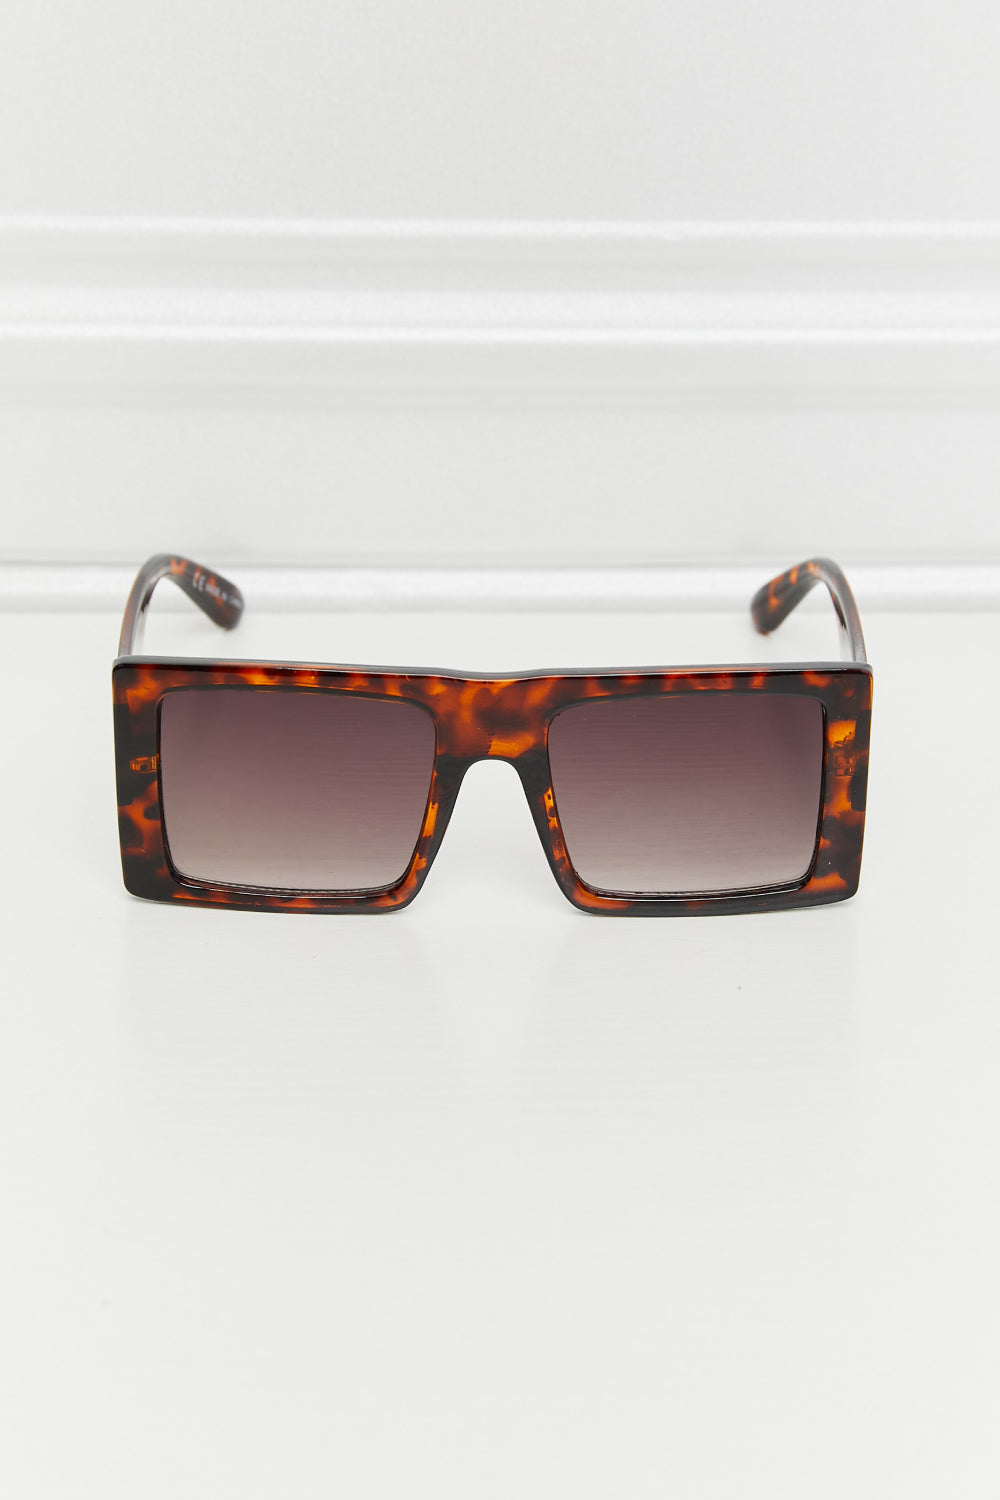 Lavender Square Polycarbonate Sunglasses Accessories